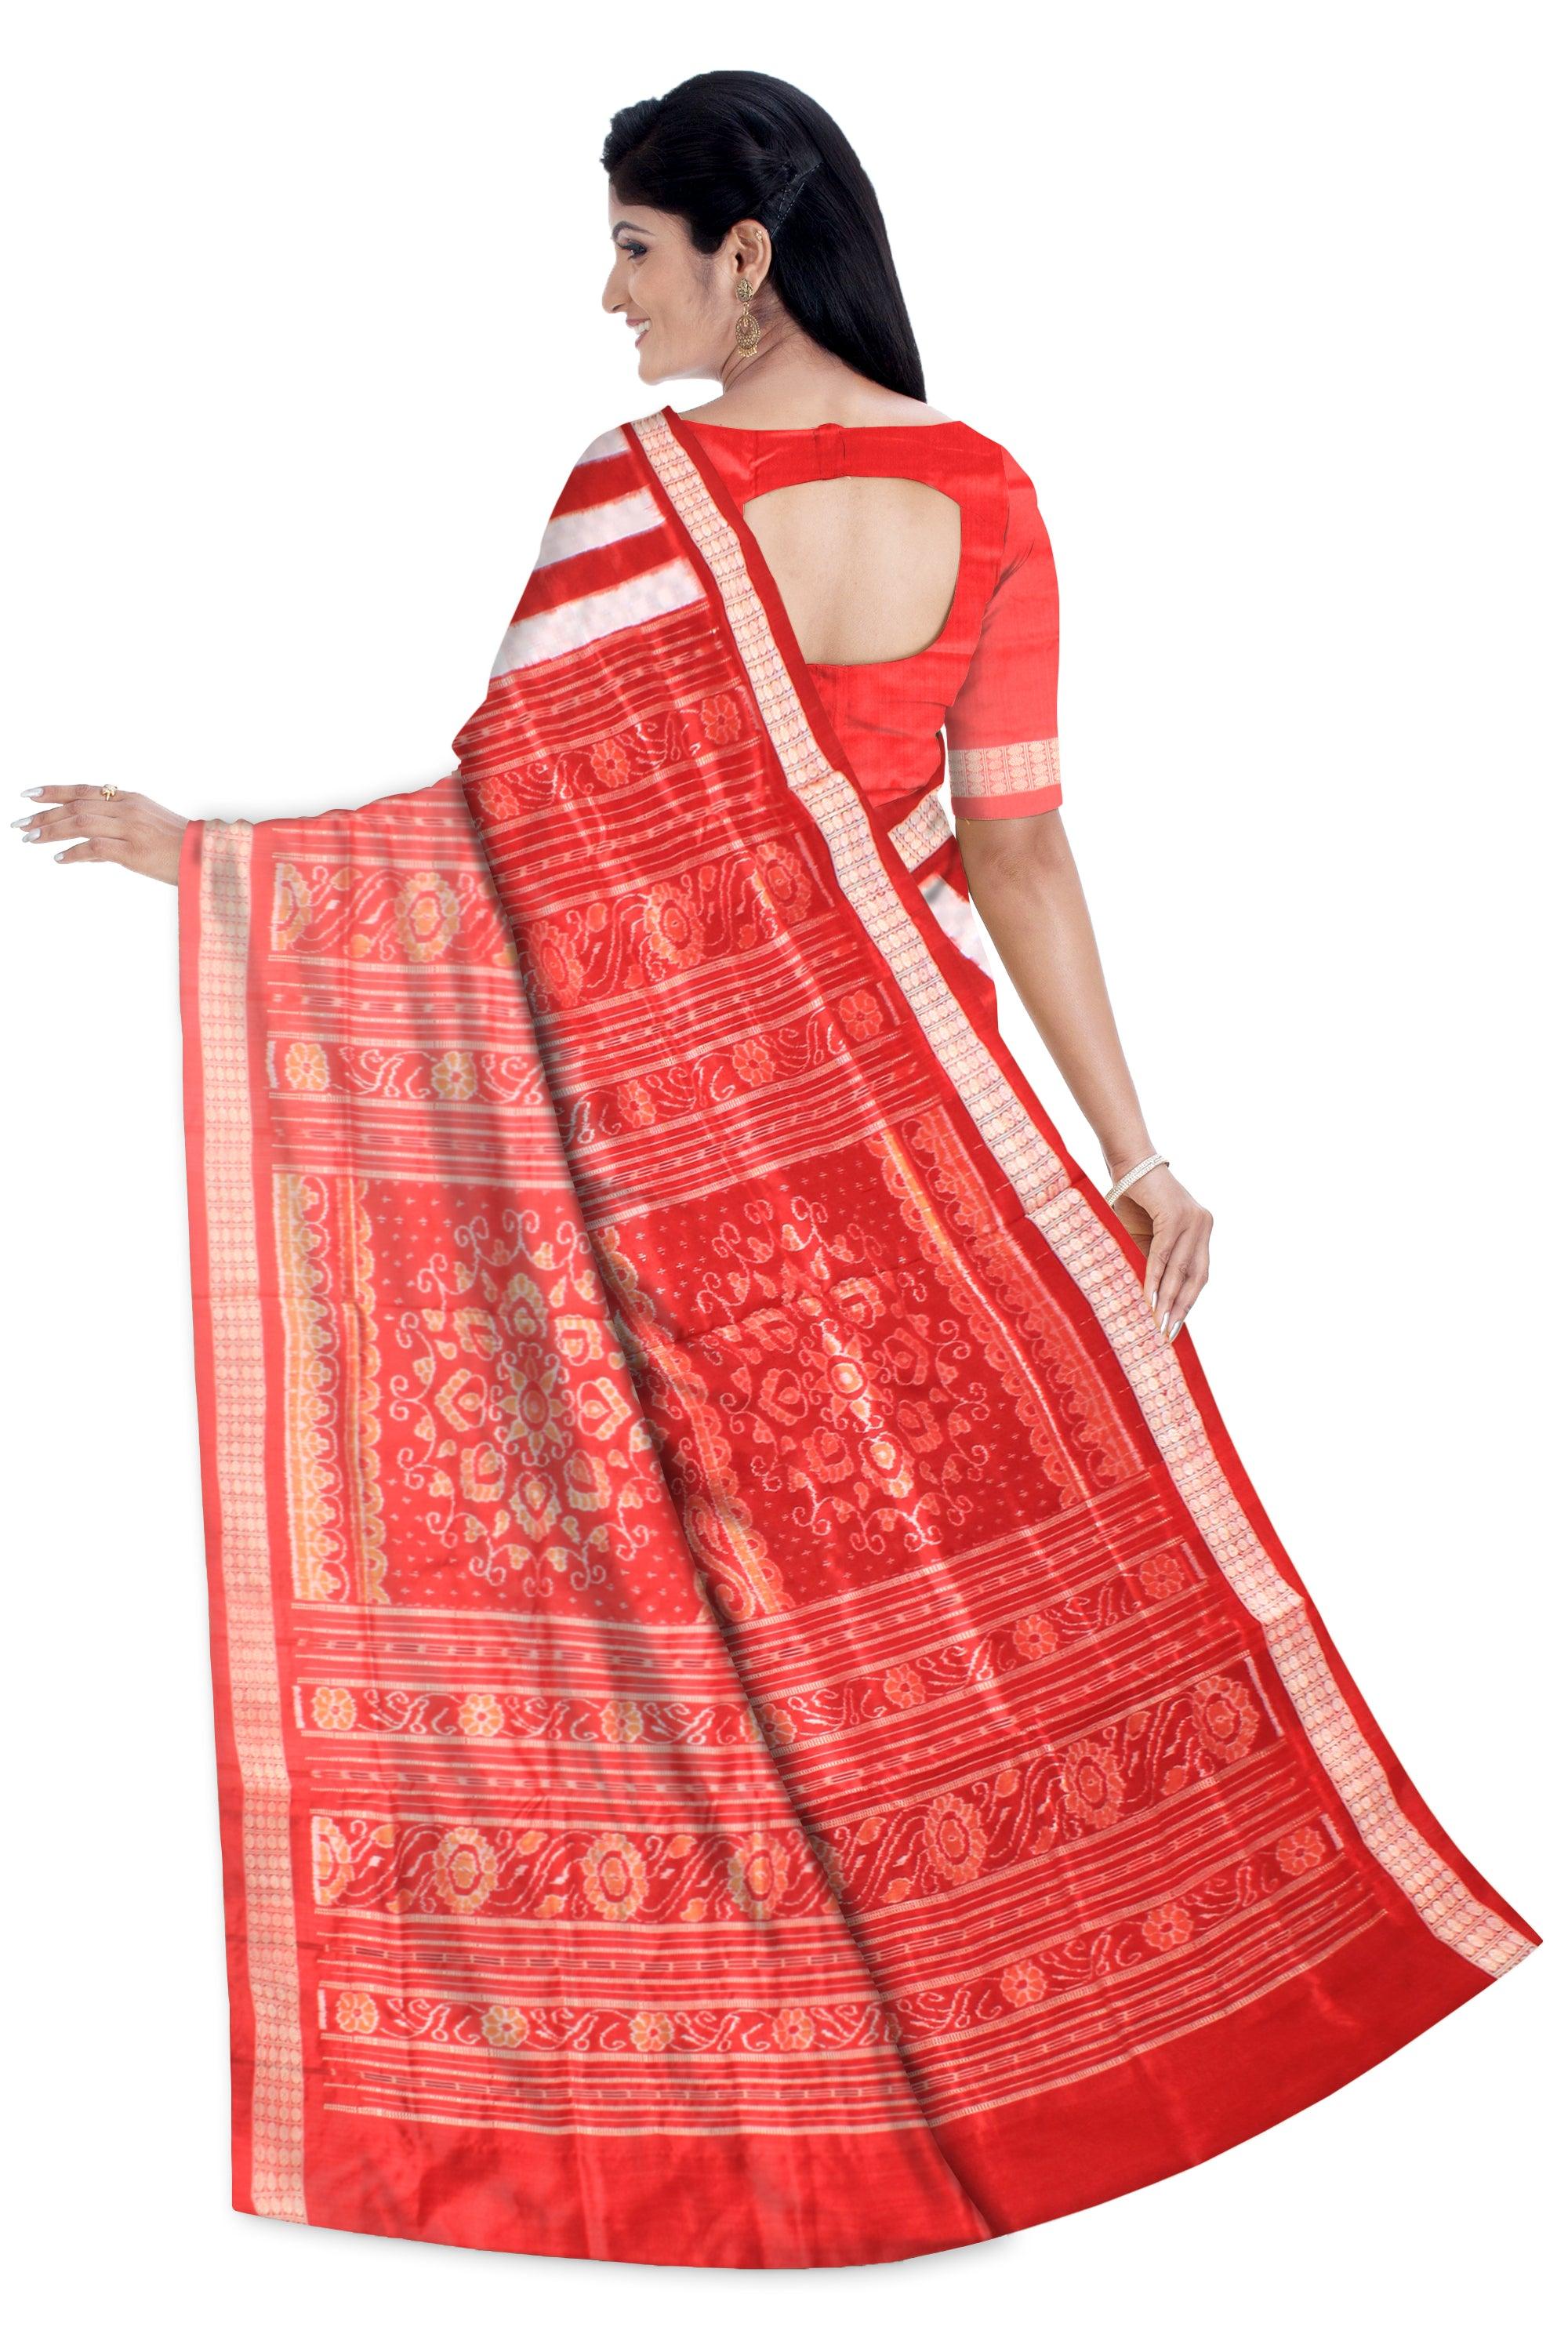 Full body Check design White and Red color Sambalpuri Pata saree with blouse piece. - Koshali Arts & Crafts Enterprise